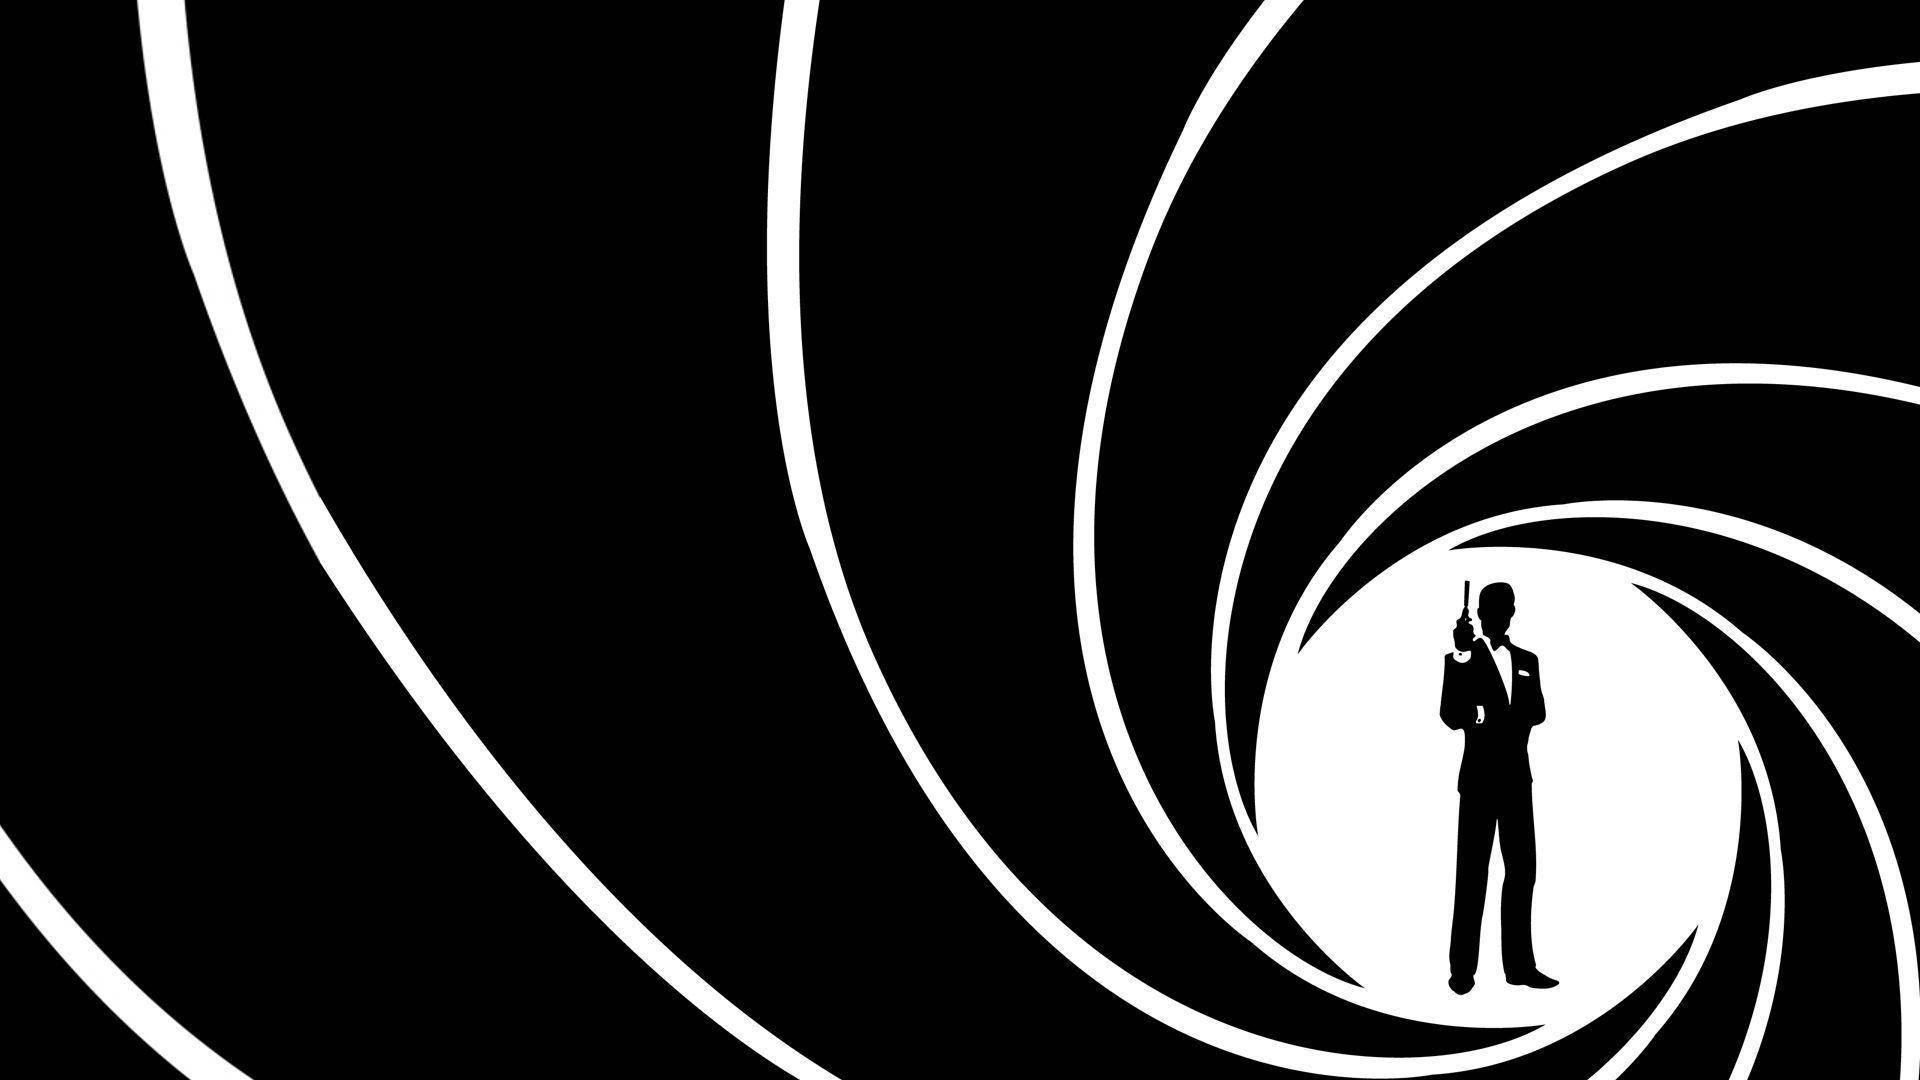 James Bond Black And White Silhouette Wallpaper